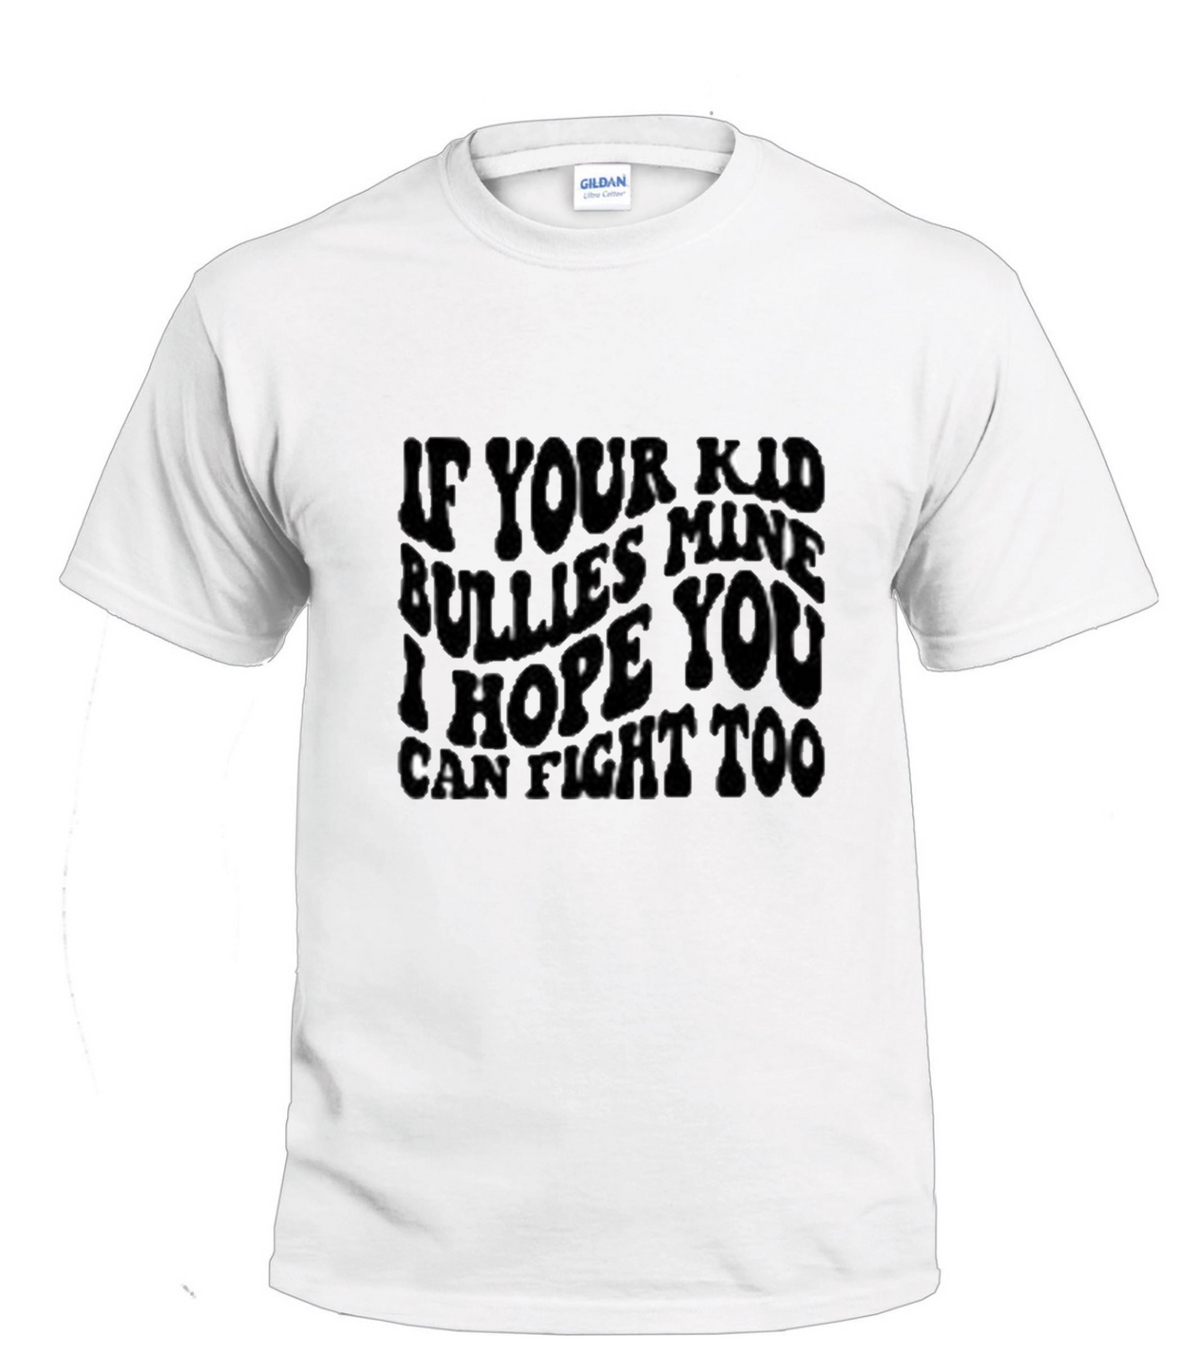 If Your Kid Bullies Mine t-shirt